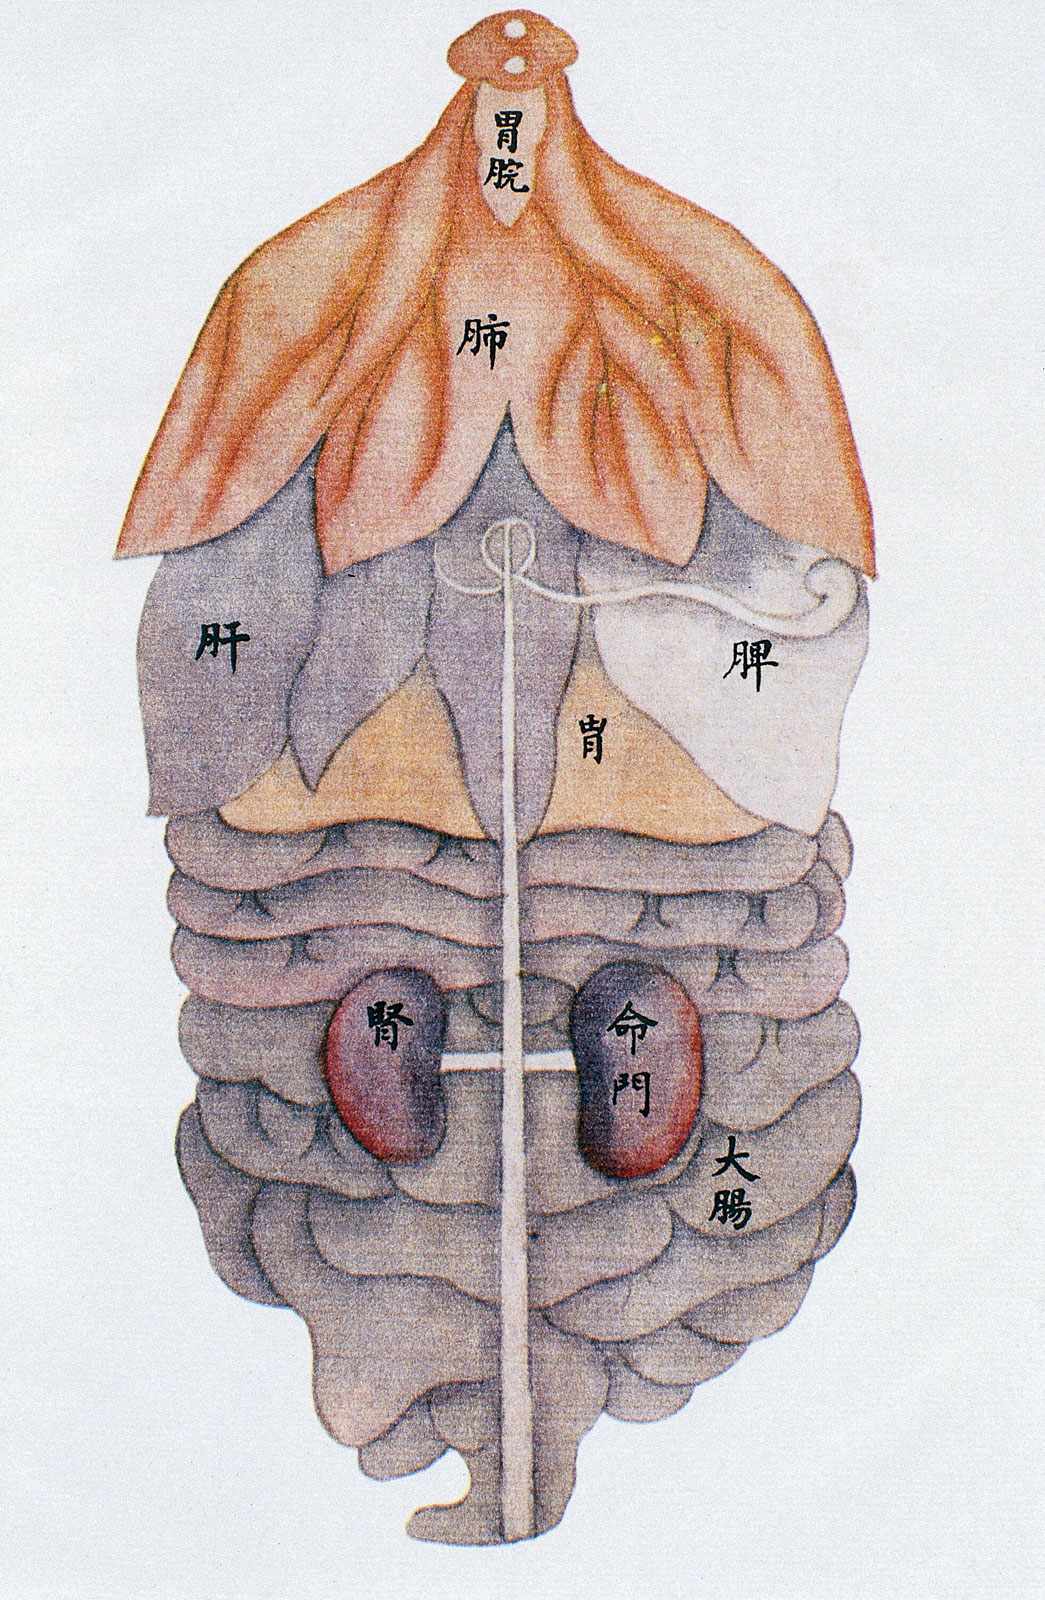 Anónimo, dibujo anatómico posterior de las vísceras, China, siglos XVII-XVIII 